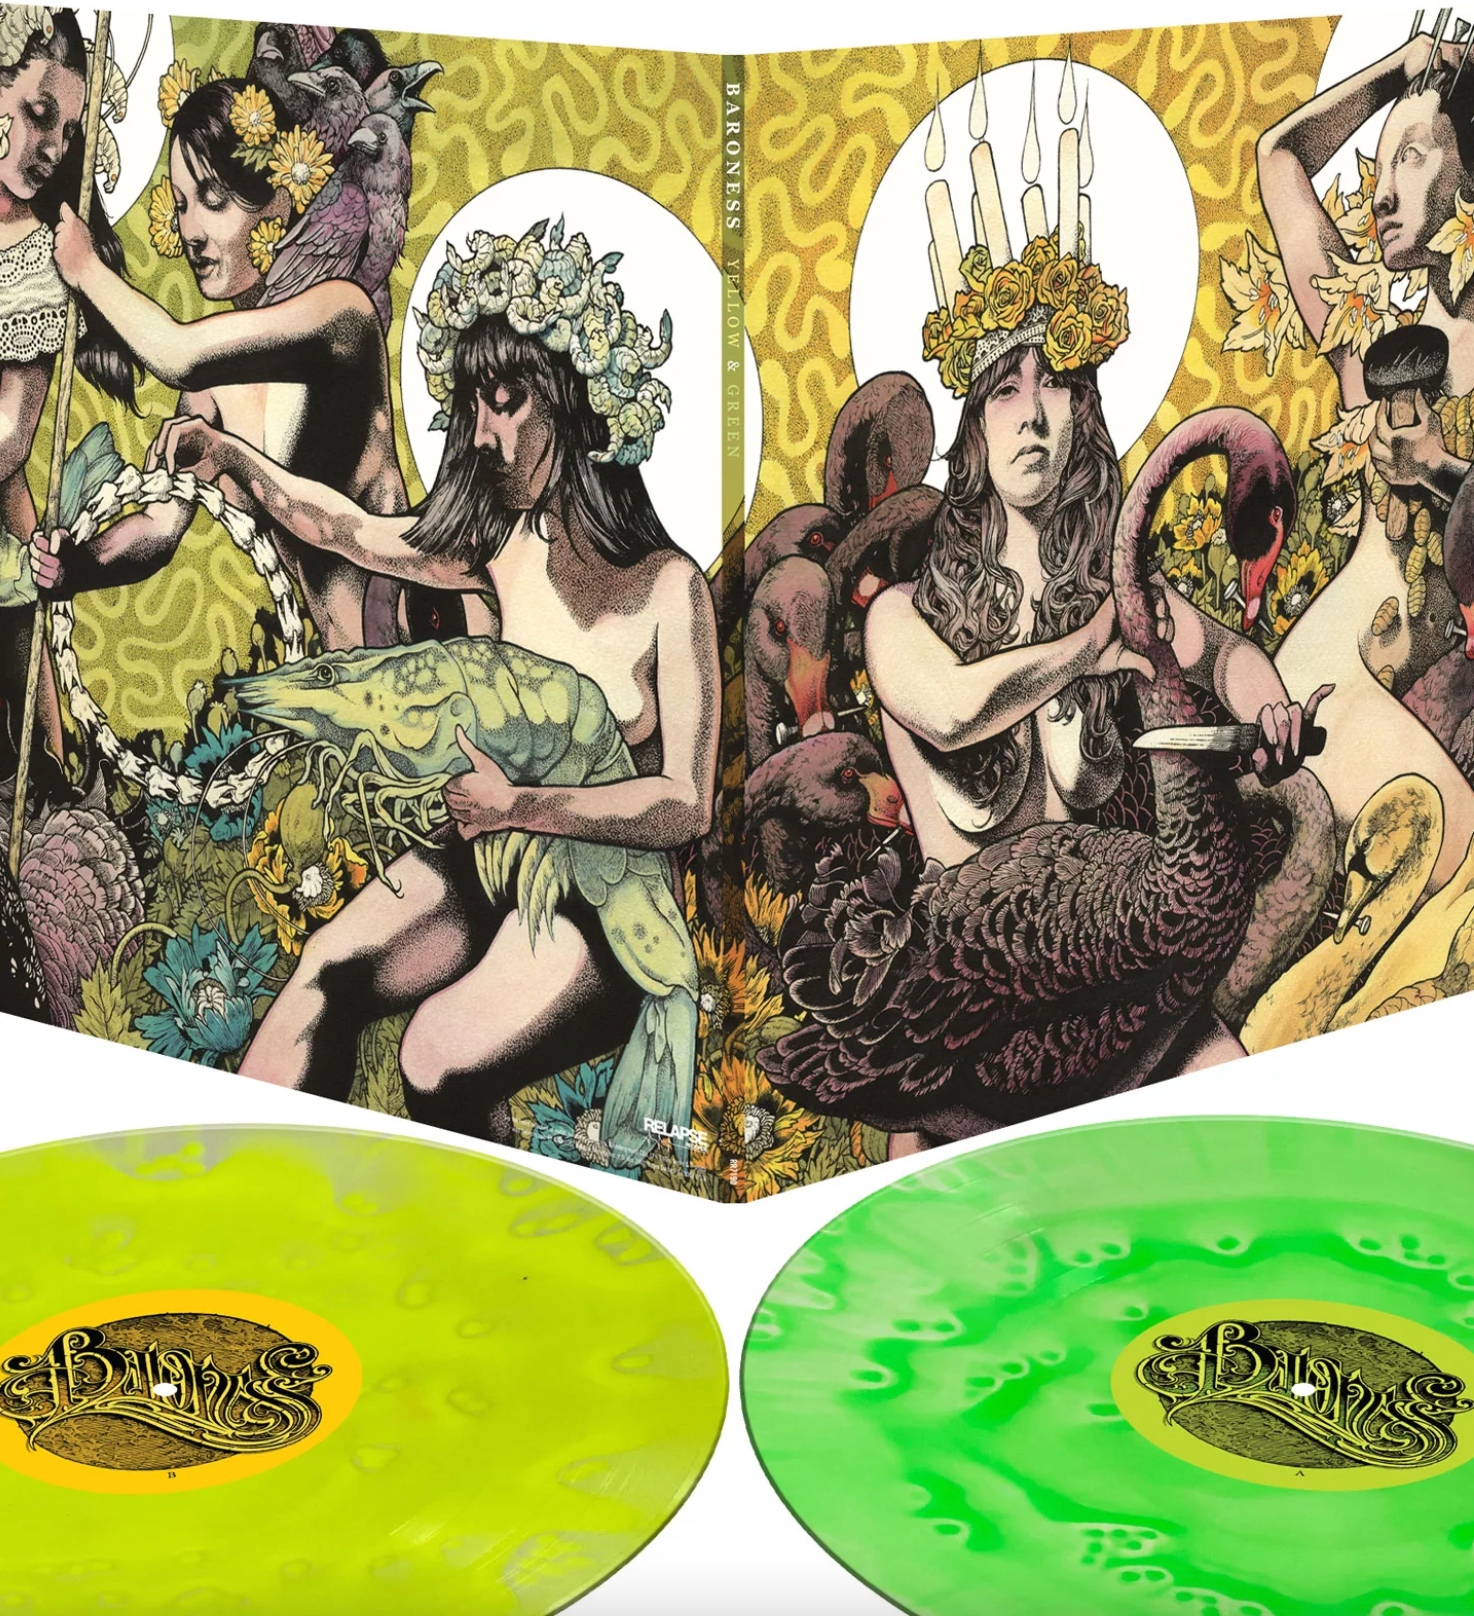 BARONESS 'YELLOW & GREEN' 2LP (Yellow & Green Vinyl)